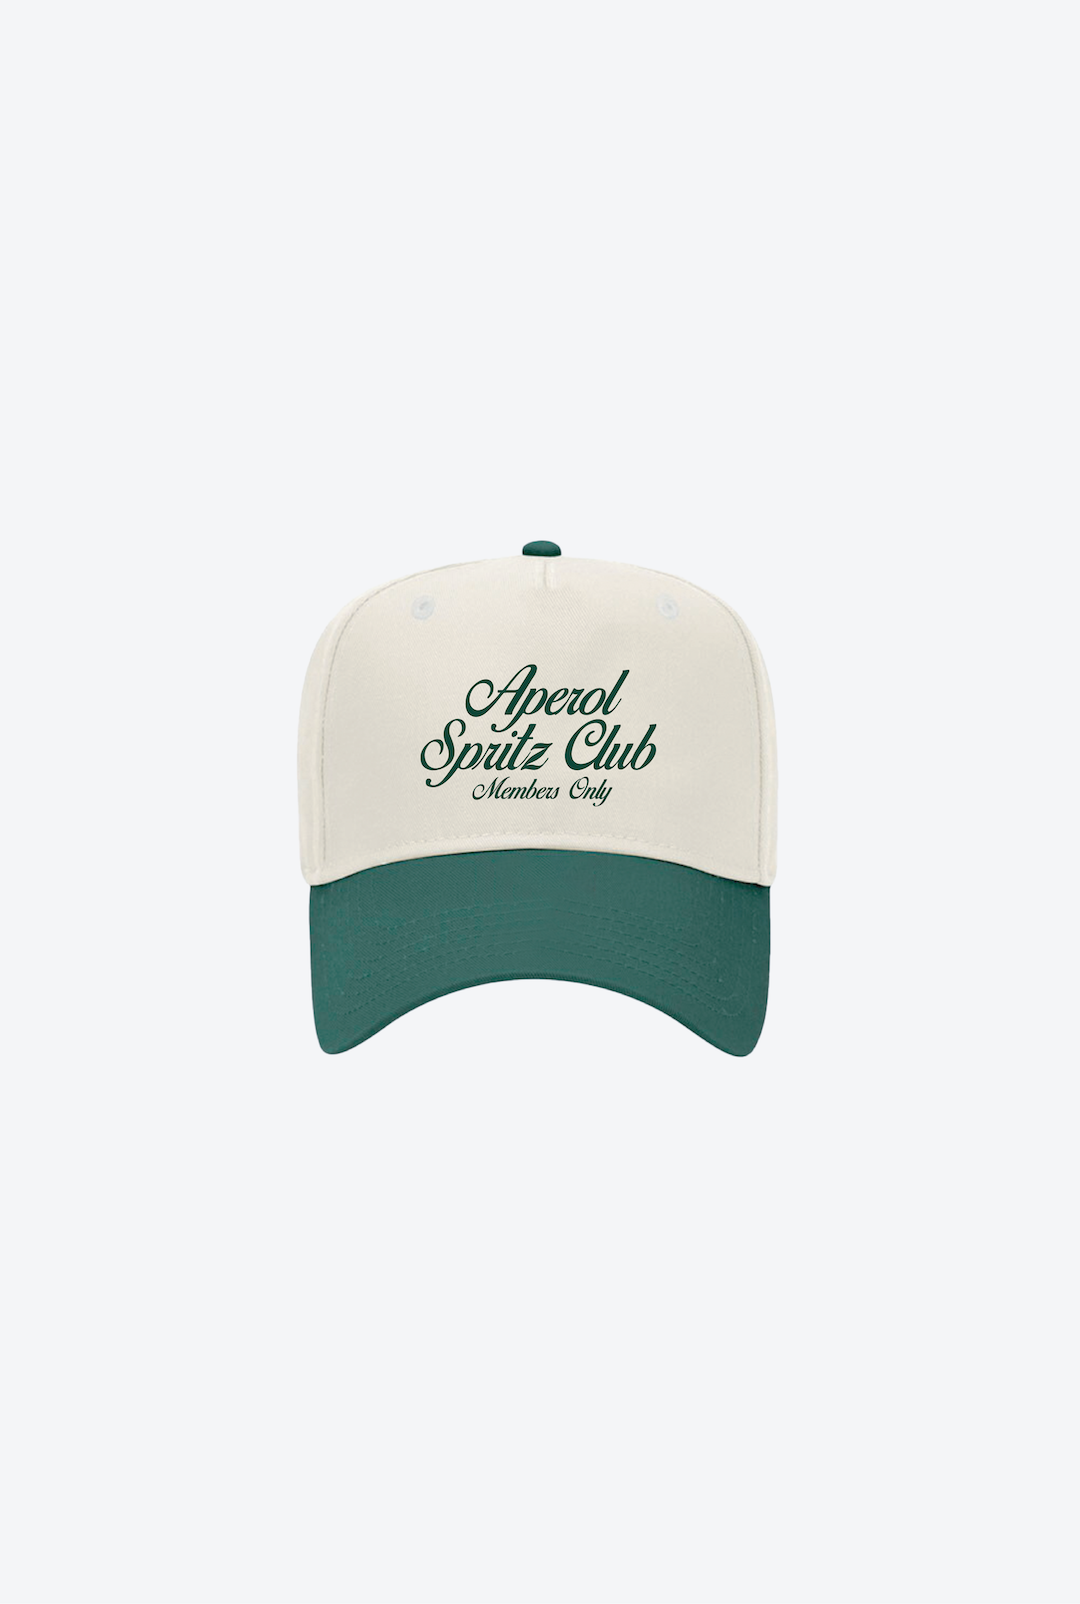 Aperol Spritz Club A-Frame Cap - Forest Green/Ivory